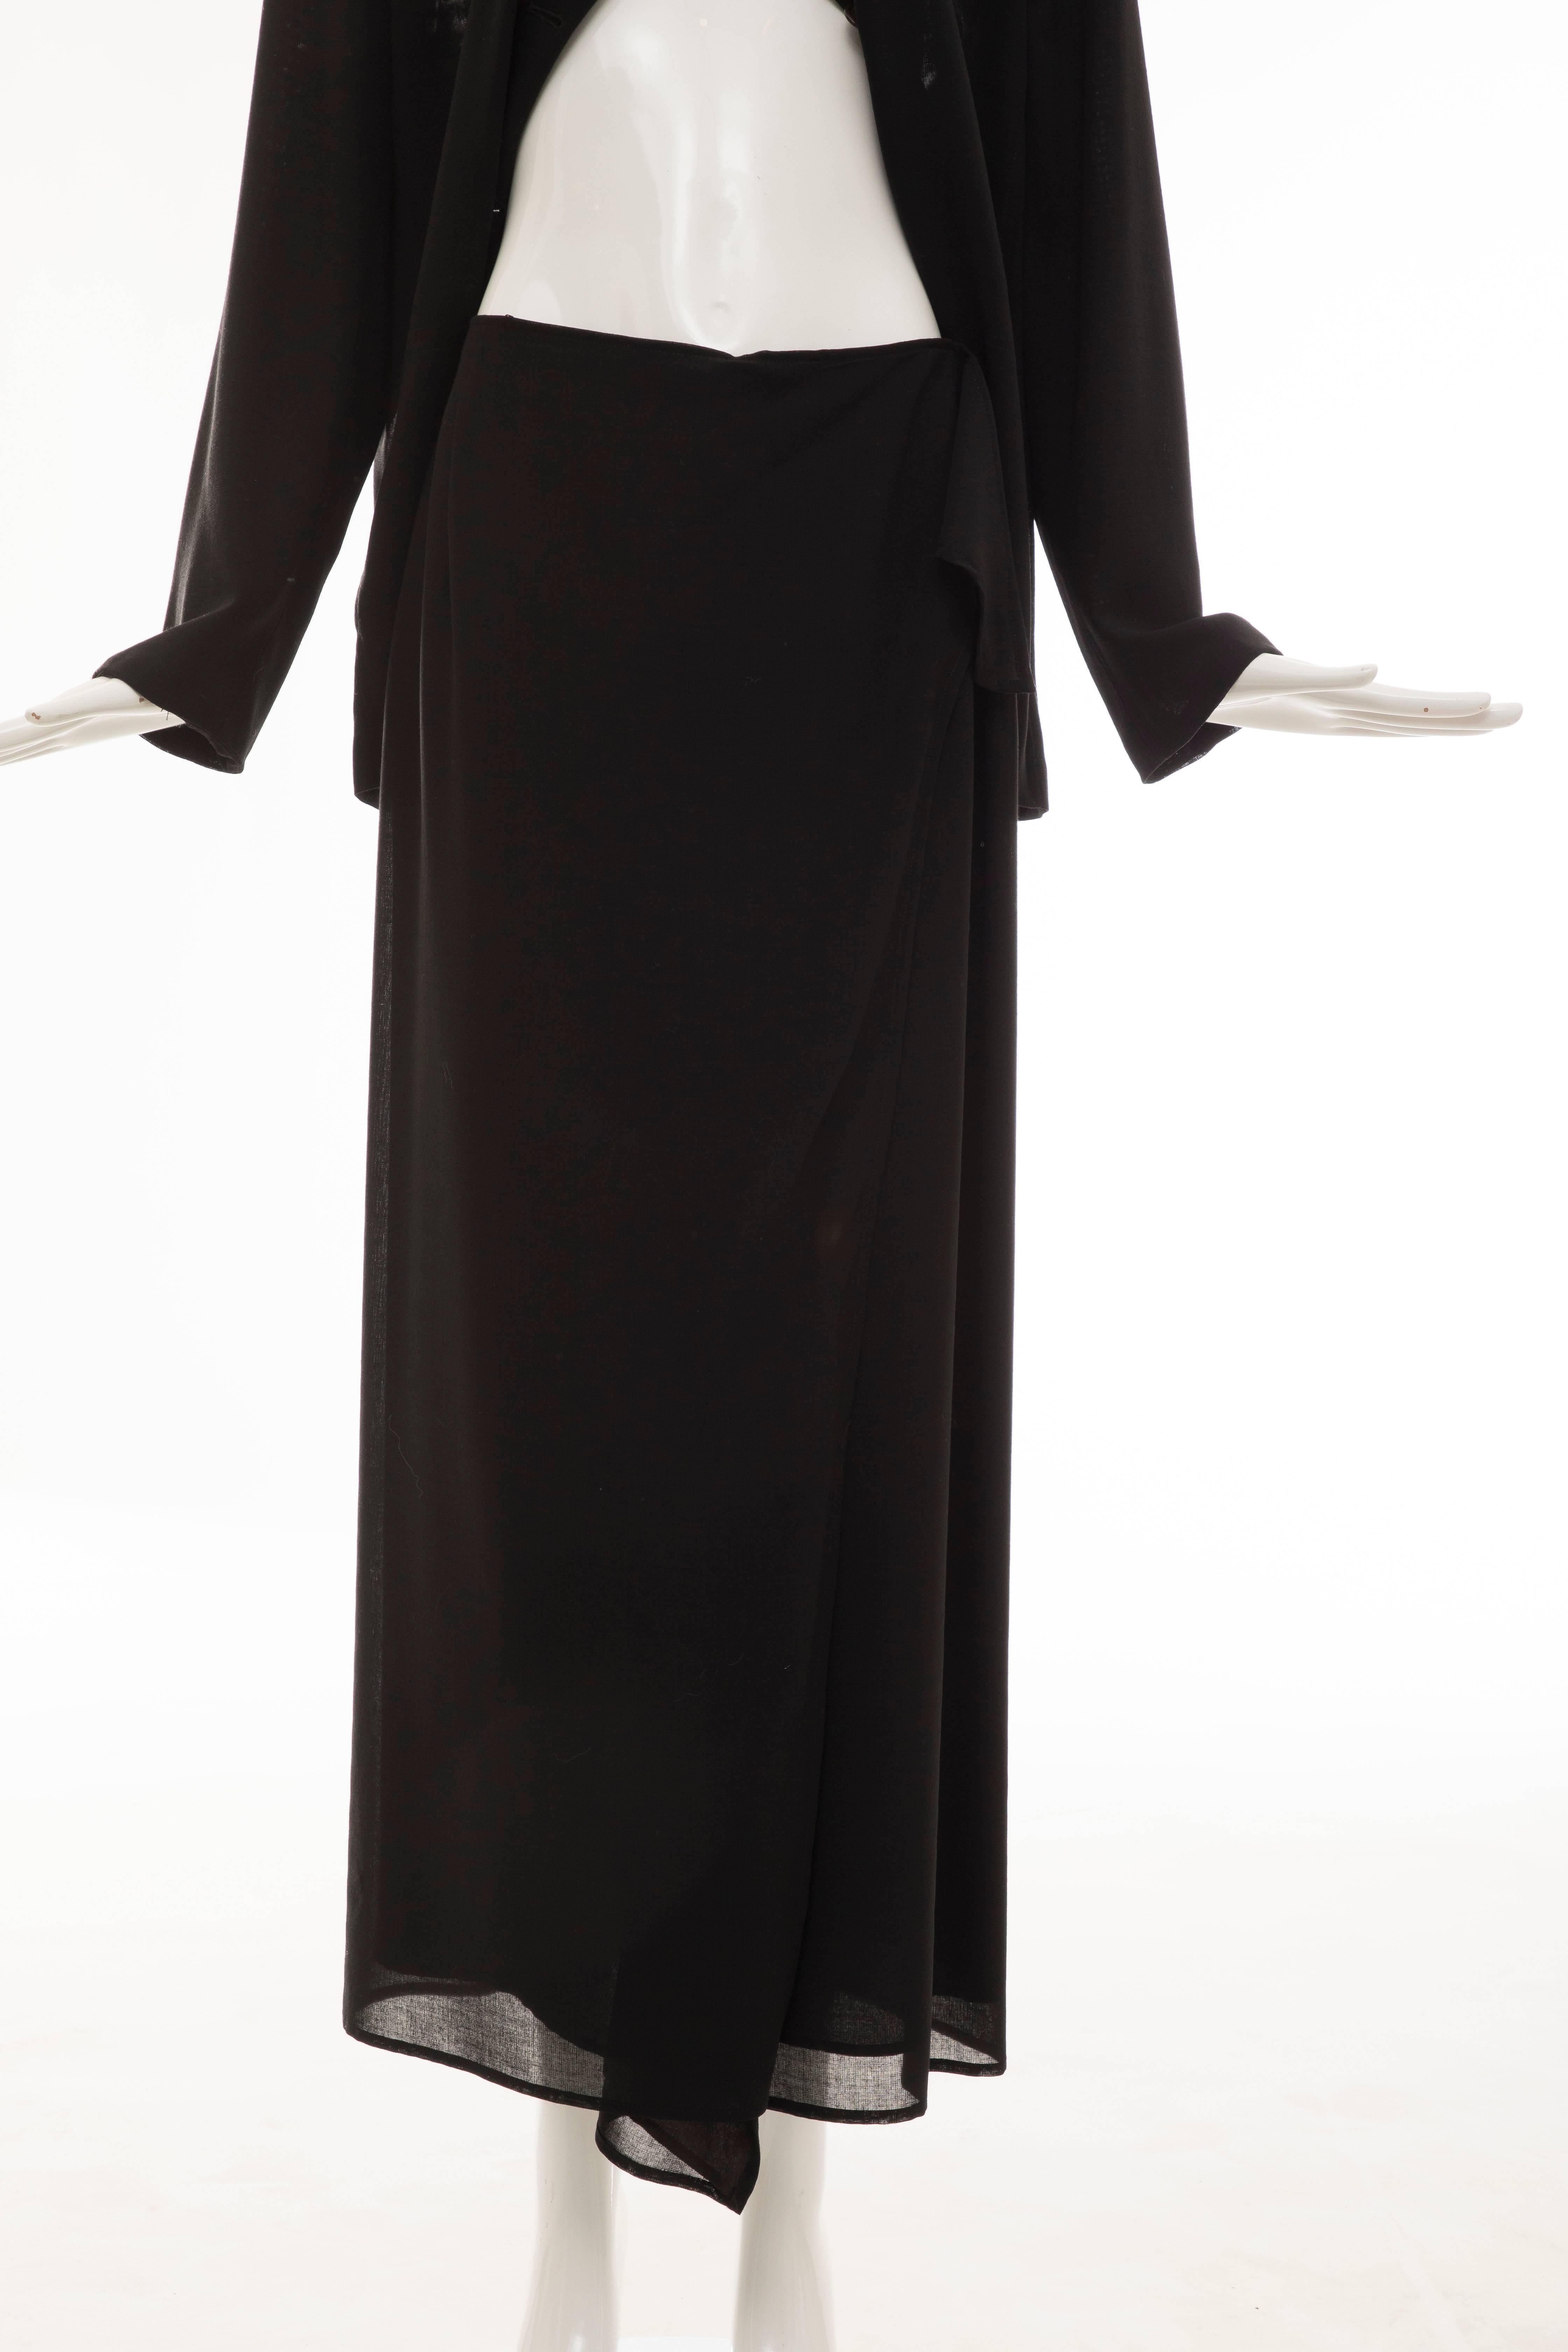 Cerruti 1881 Black Lightweight Wool Gauze Skirt-Suit, Circa 1990's For Sale 6